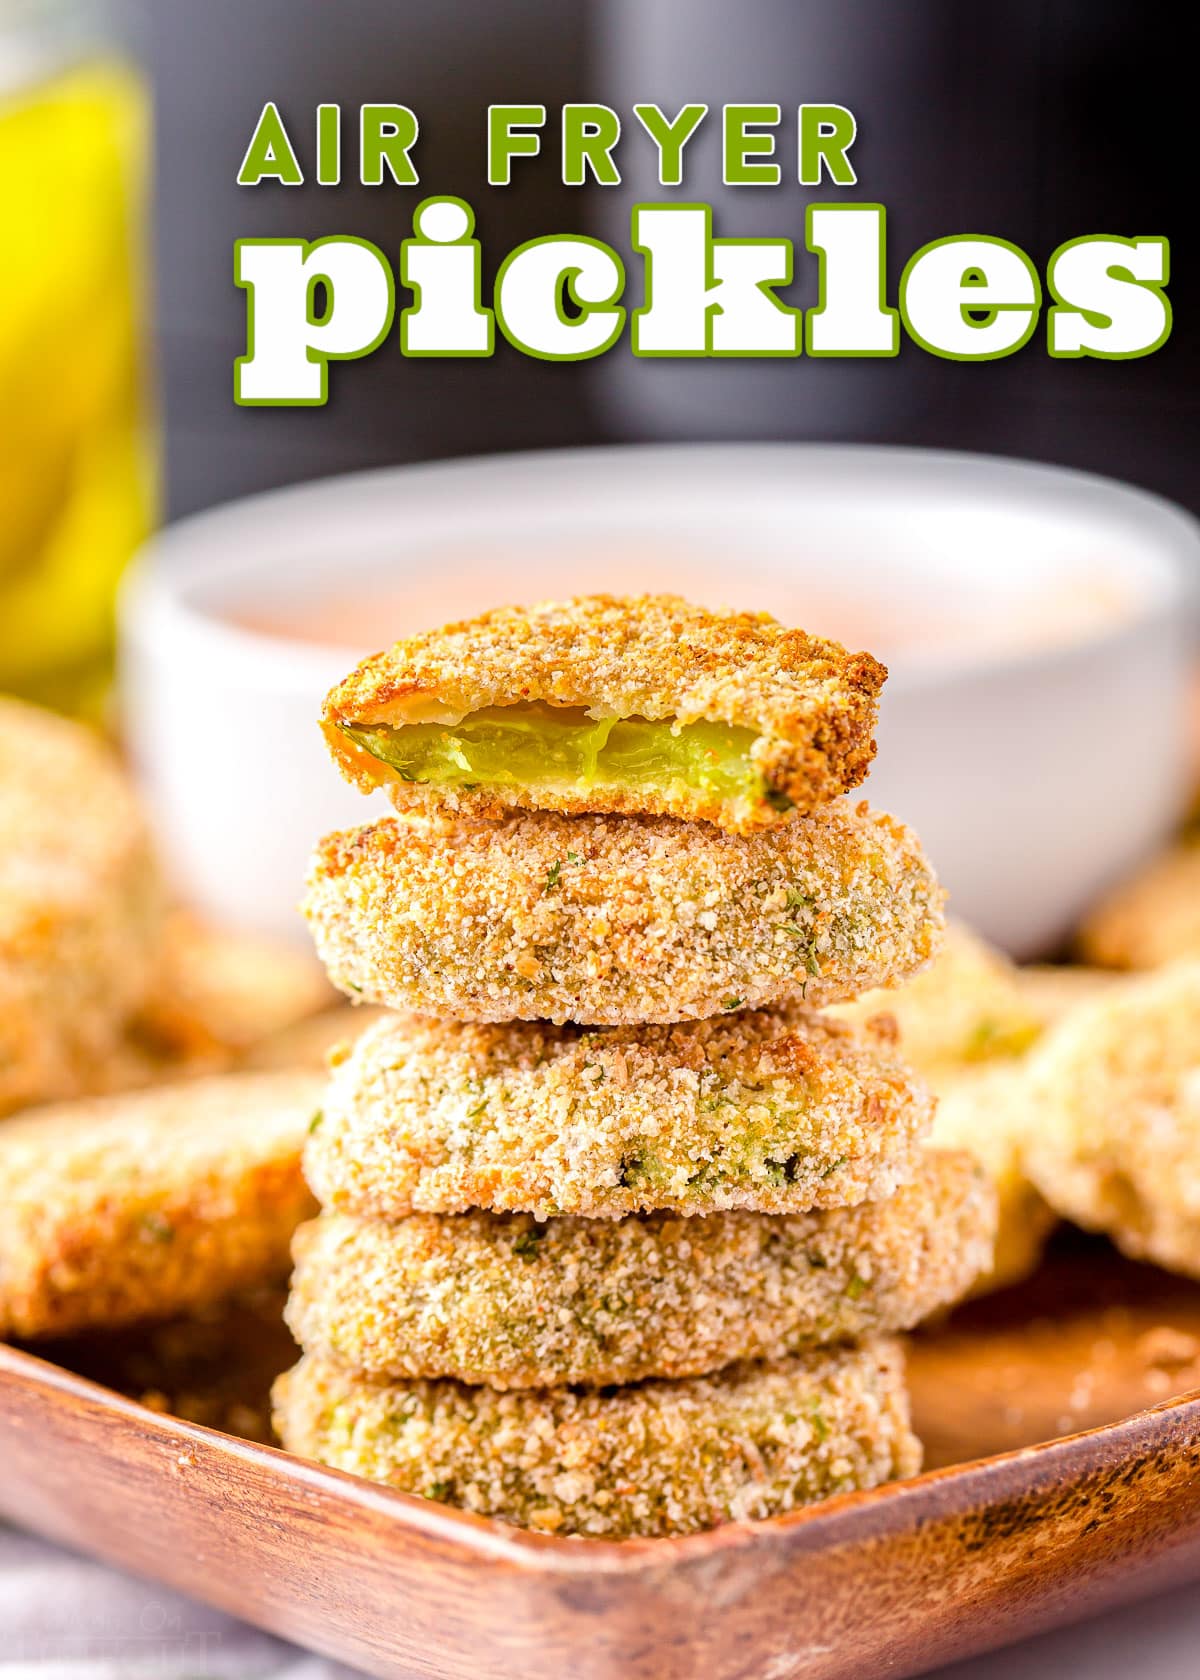 https://www.momontimeout.com/wp-content/uploads/2021/05/air-fryer-pickles-title-1.jpeg